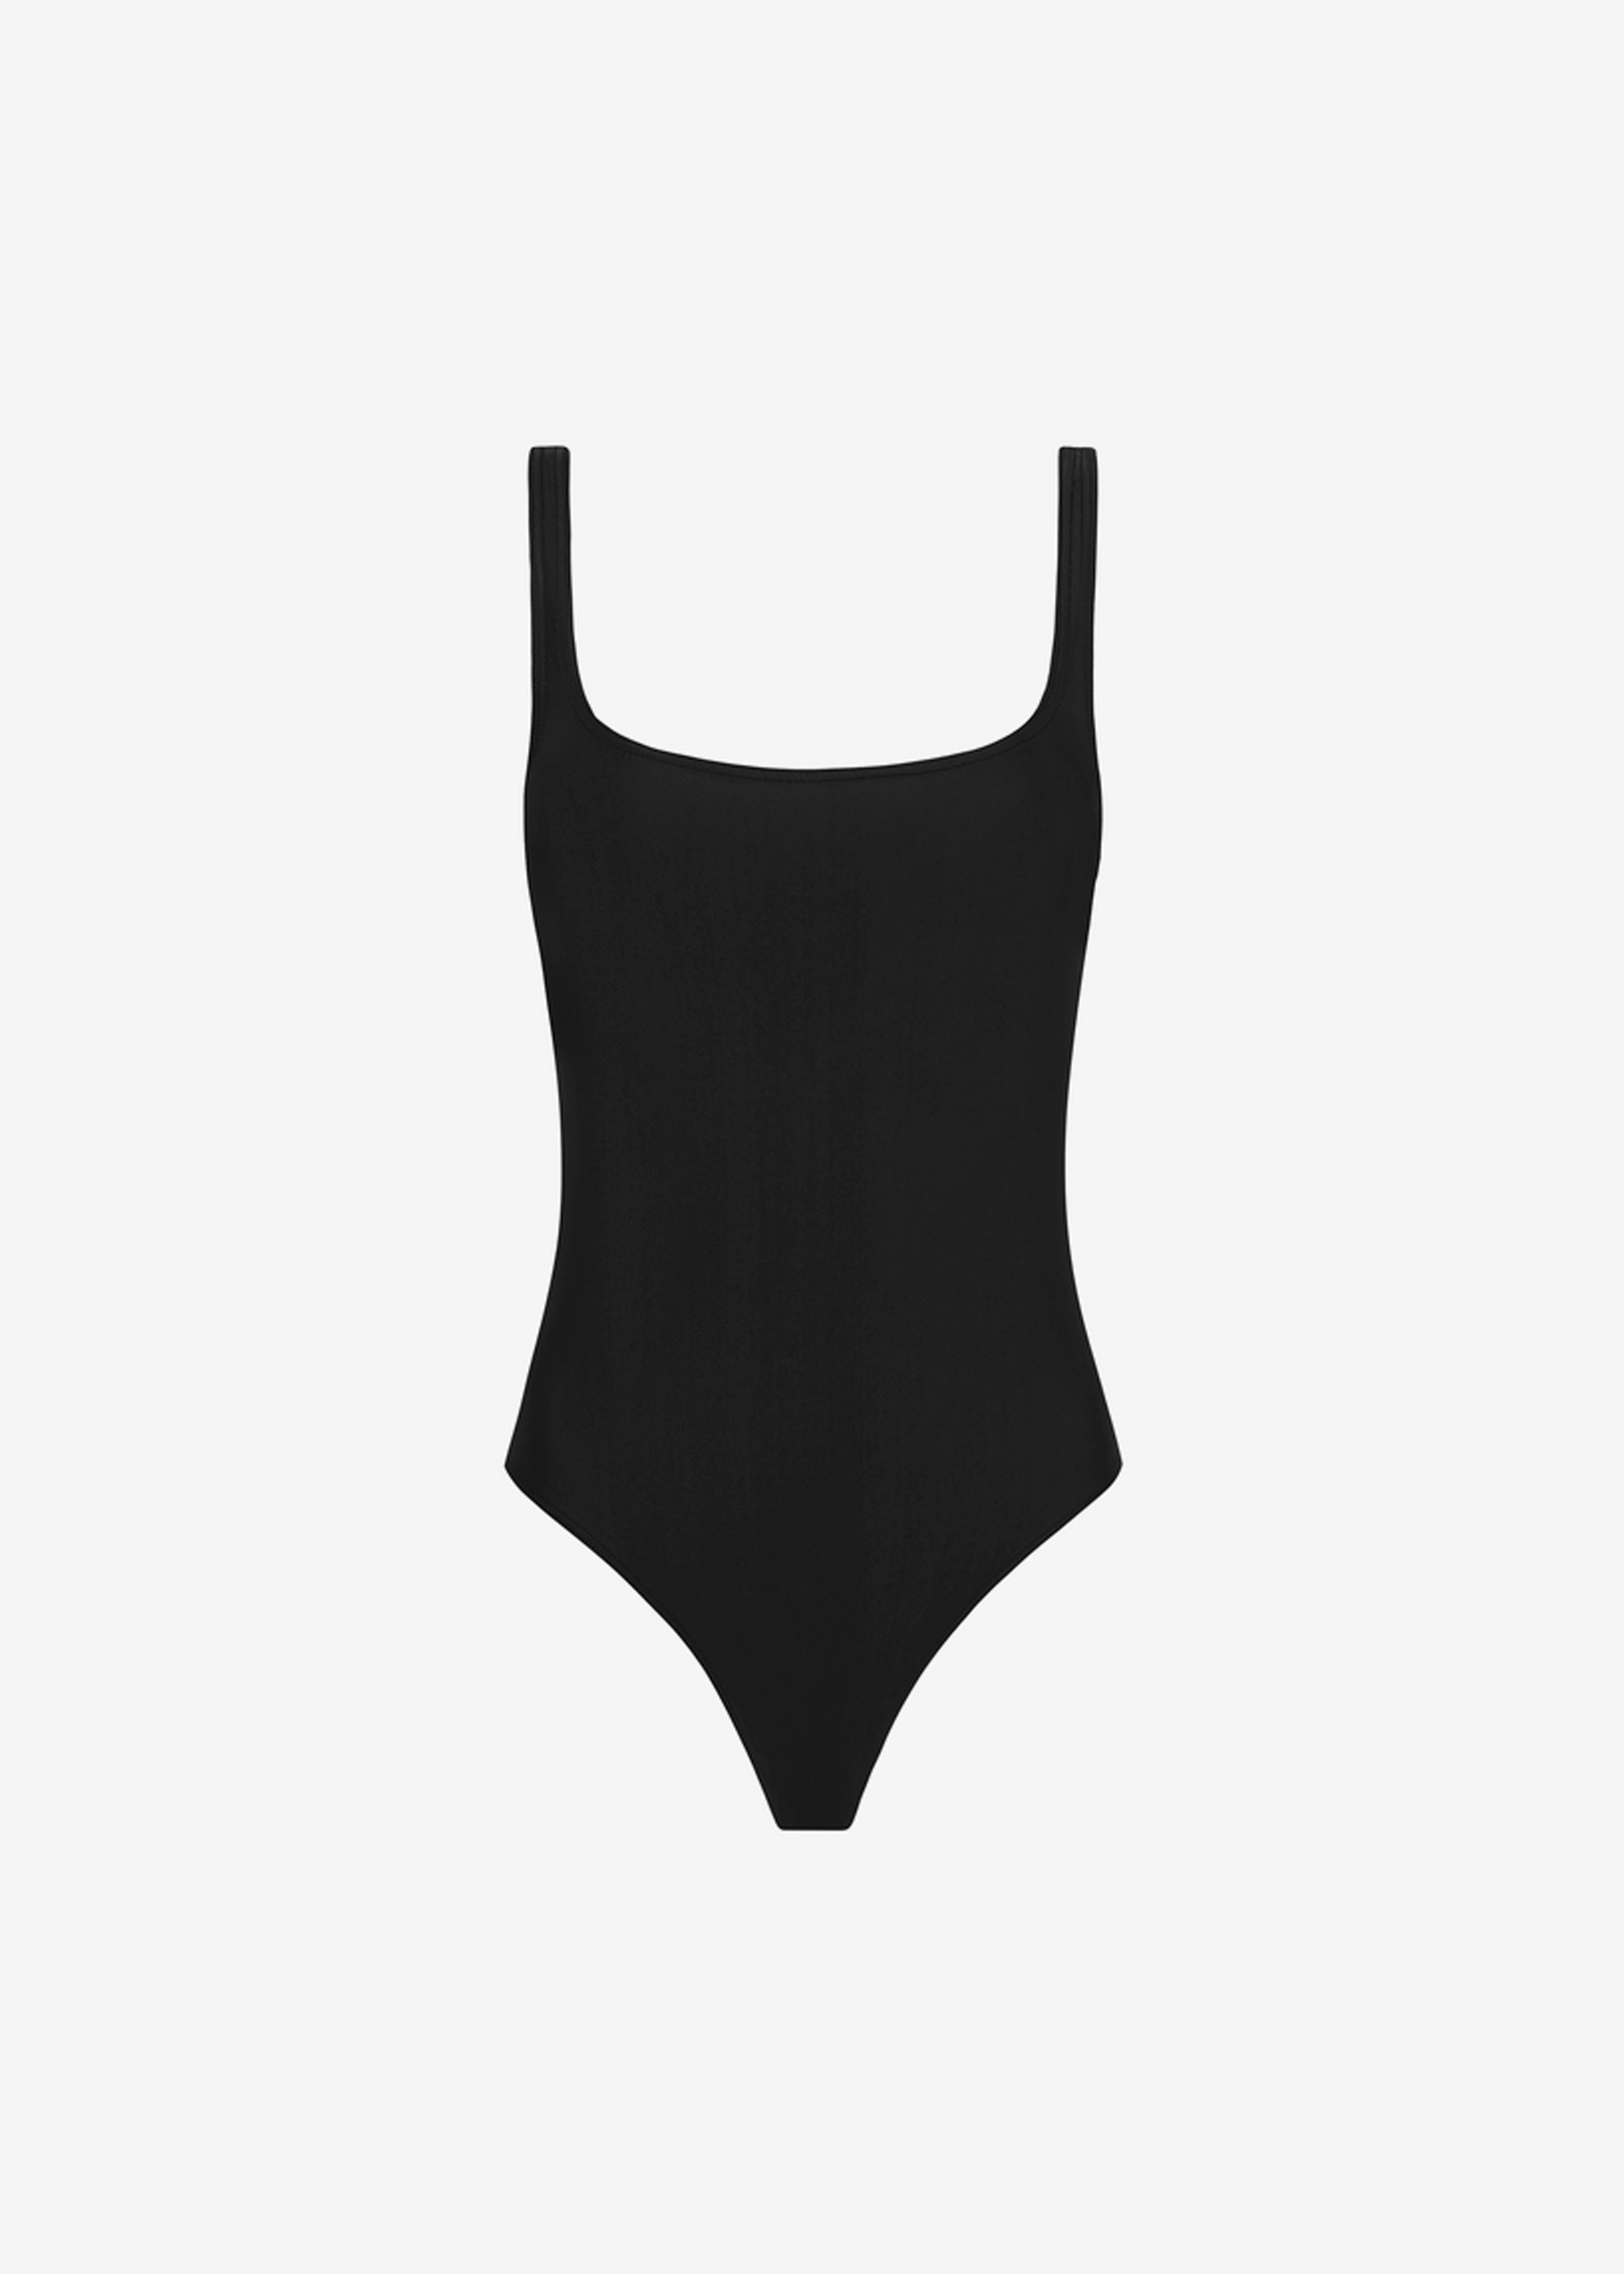 Matteau Nineties Maillot Swimsuit - Black - 6